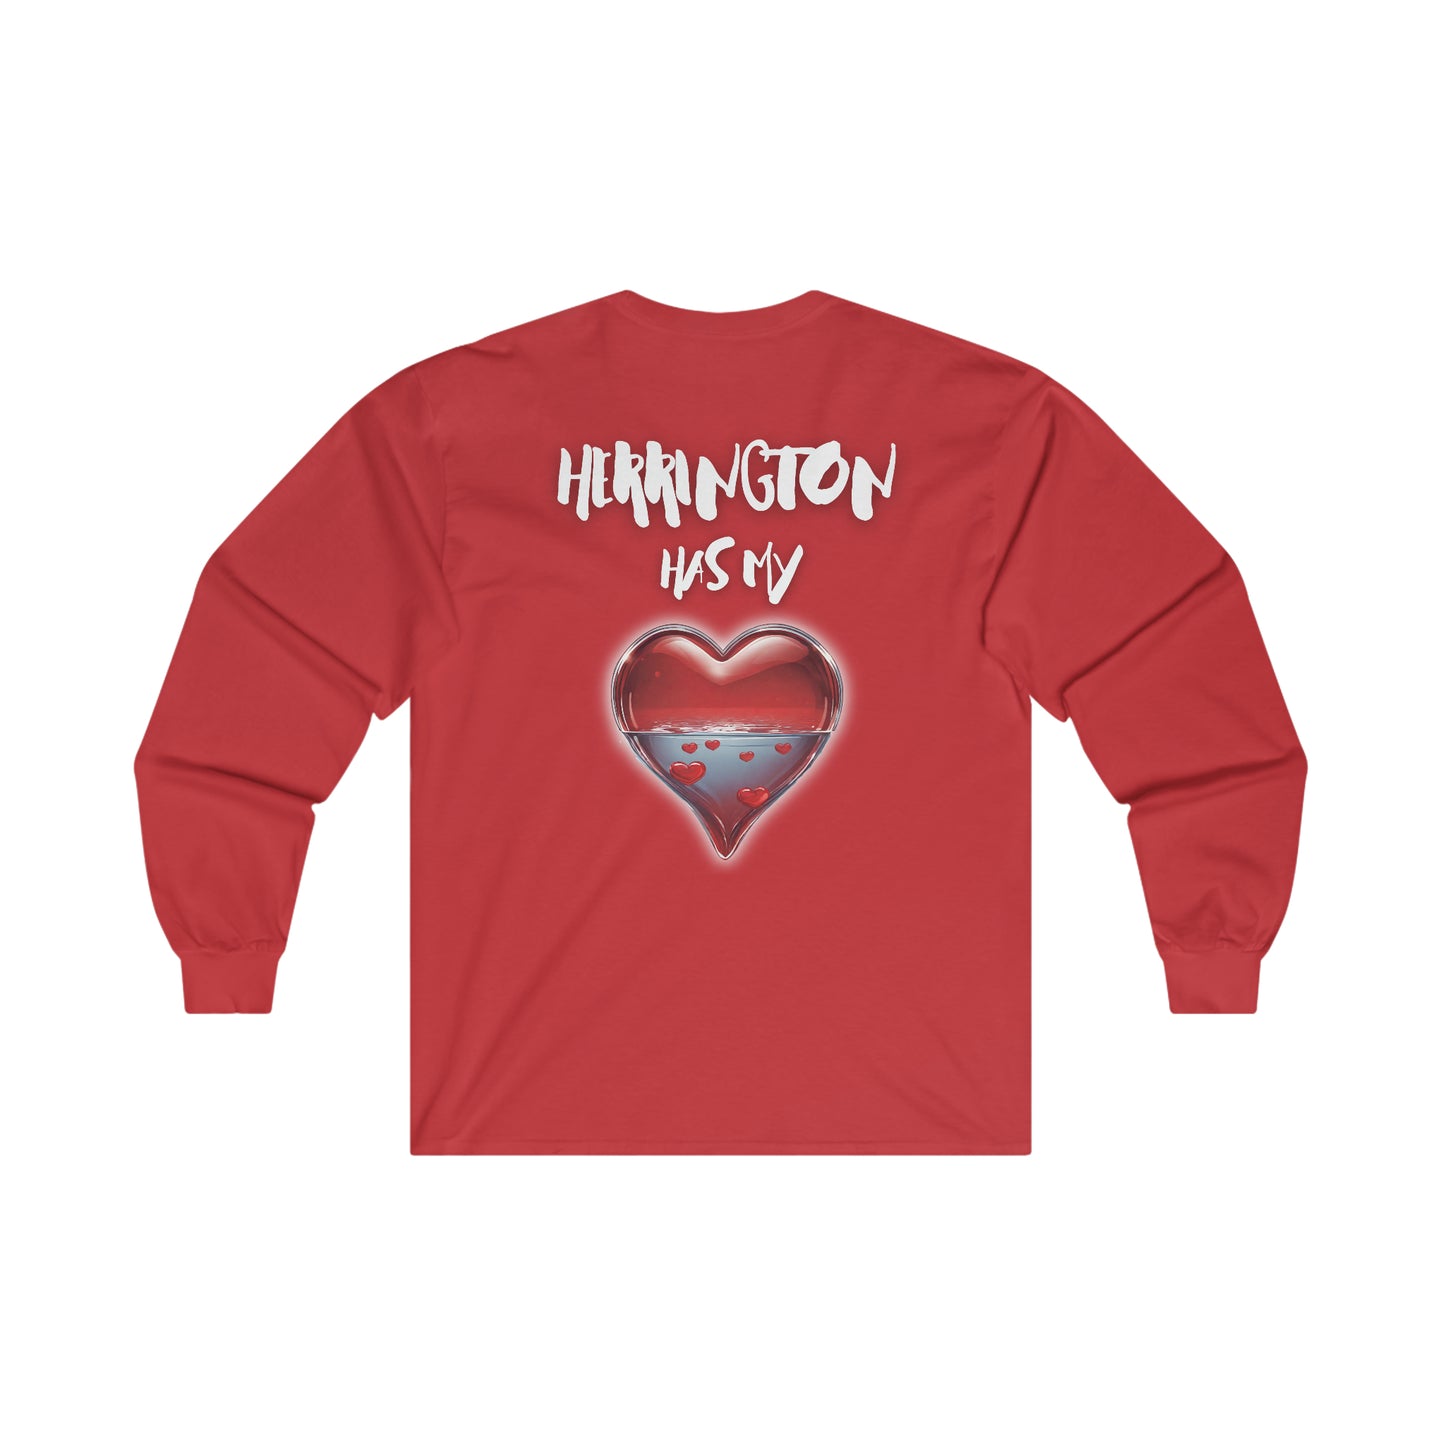 "Herrington Has My Heart" Ultra Cotton Double-Sided Long Sleeve Tee